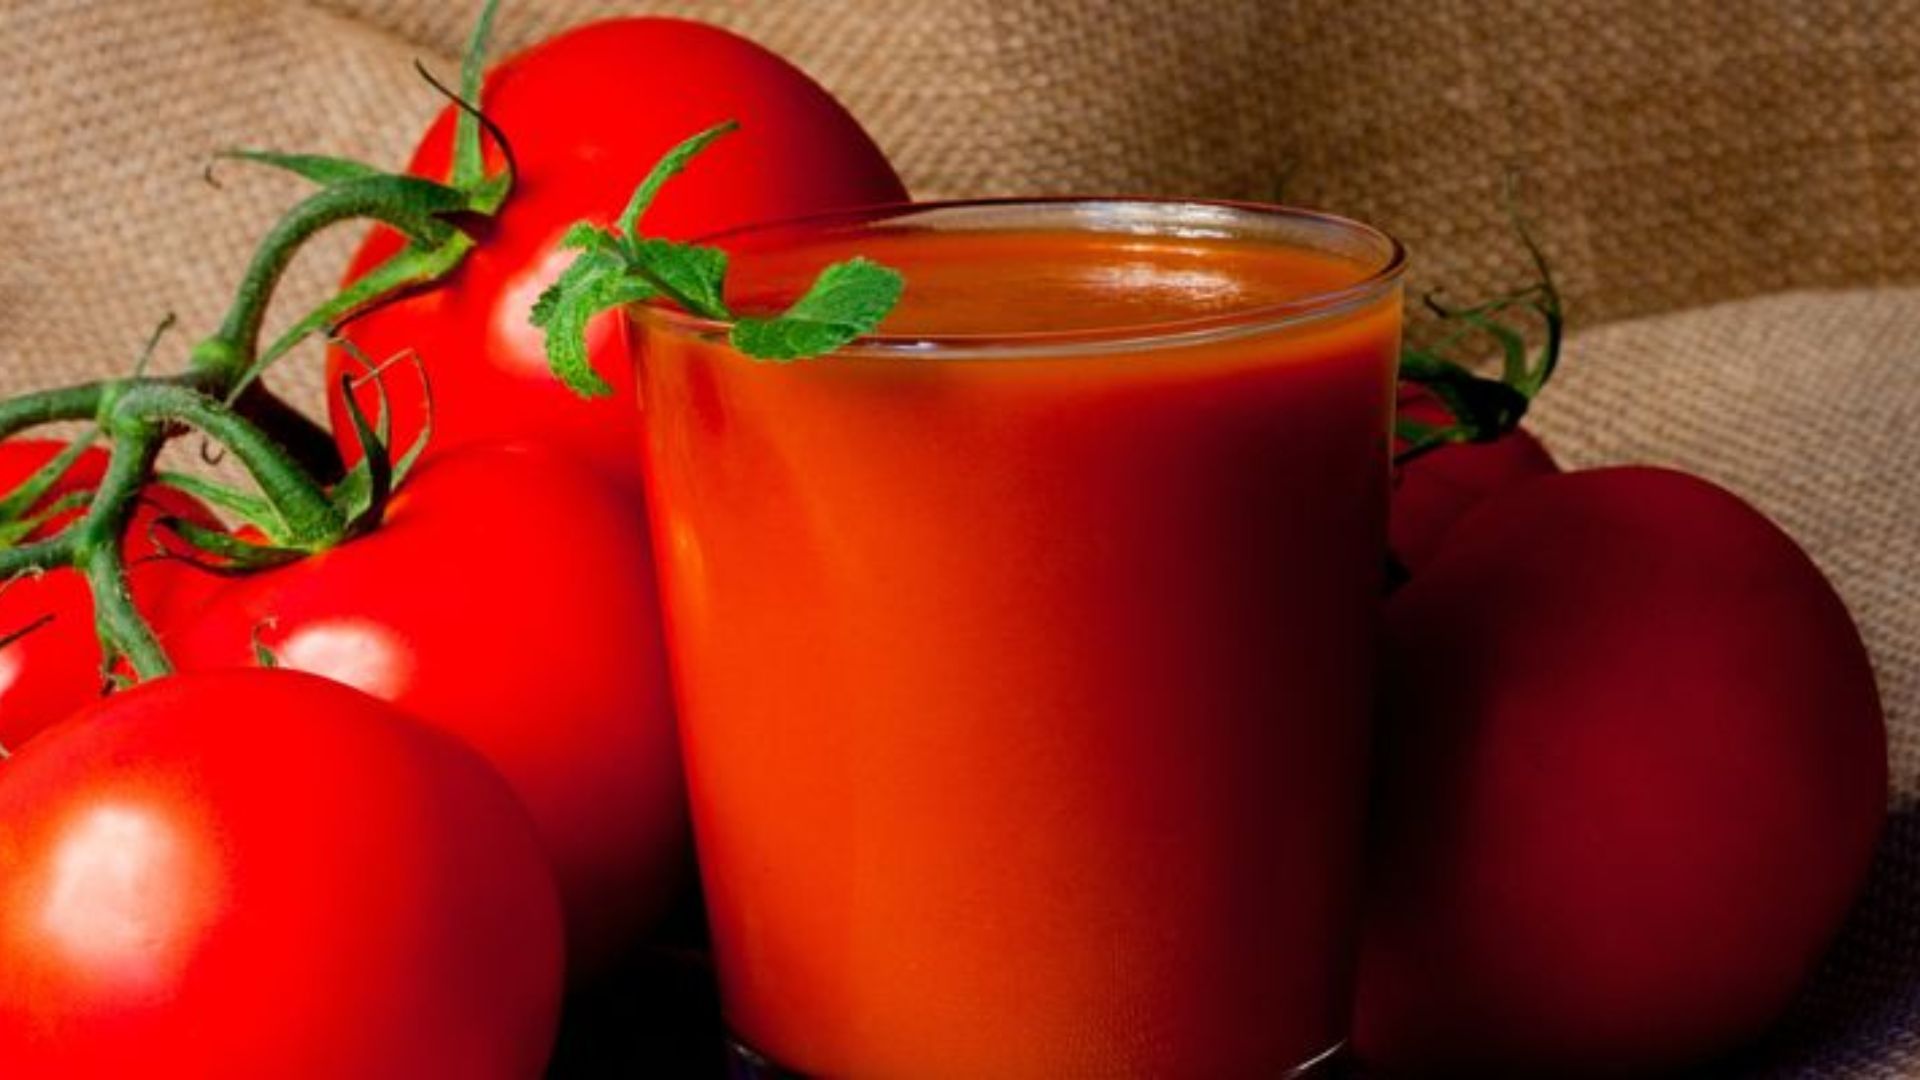 Tomato juice has antibacterial properties that can eradicate salmonella: Research